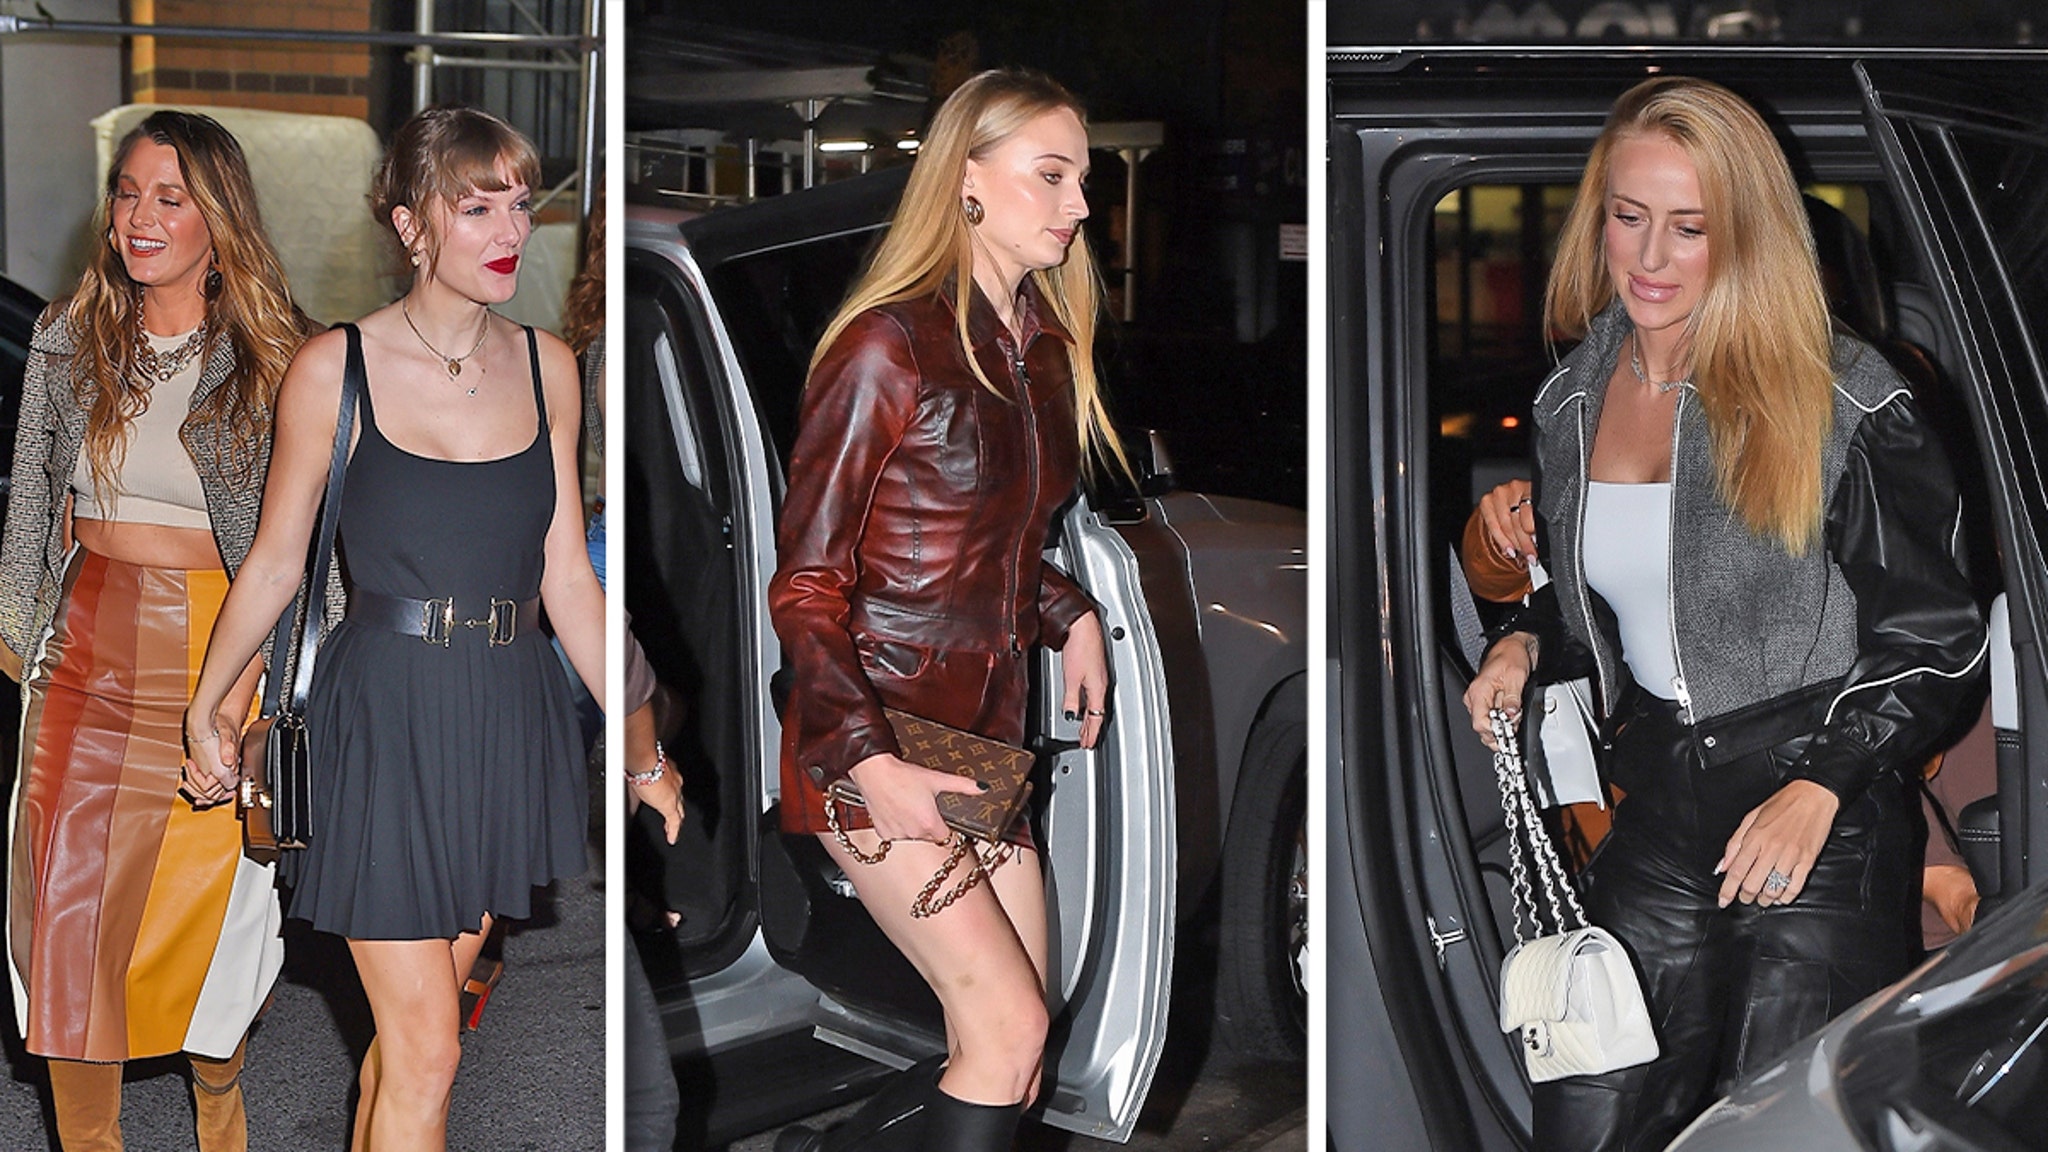 泰勒·斯威夫特 (Taylor Swift) 与索菲·特纳 (Sophie Turner)、布蕾克·莱弗利 (Blake Lively) 和布列塔尼·马霍姆斯 (Brittany Mahomes) 在纽约共进晚餐